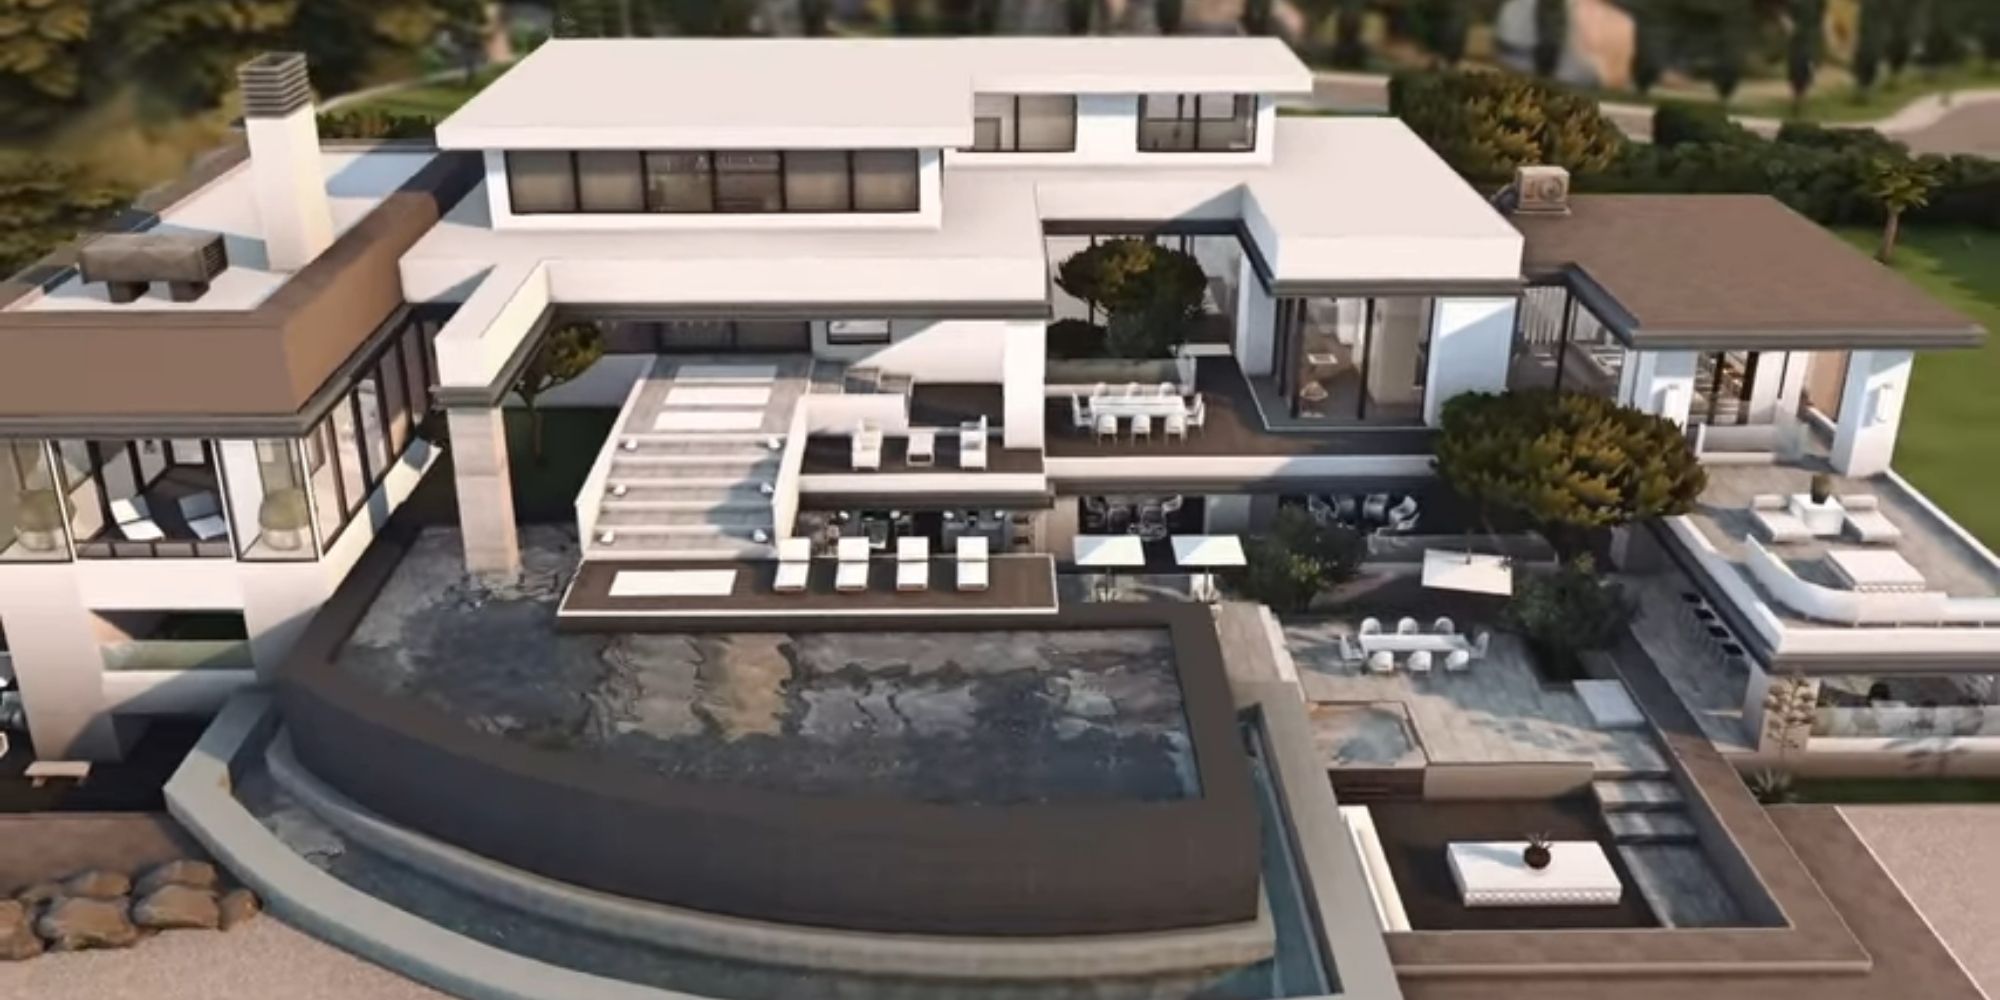 Sims 4 - Billionaire's Mansion